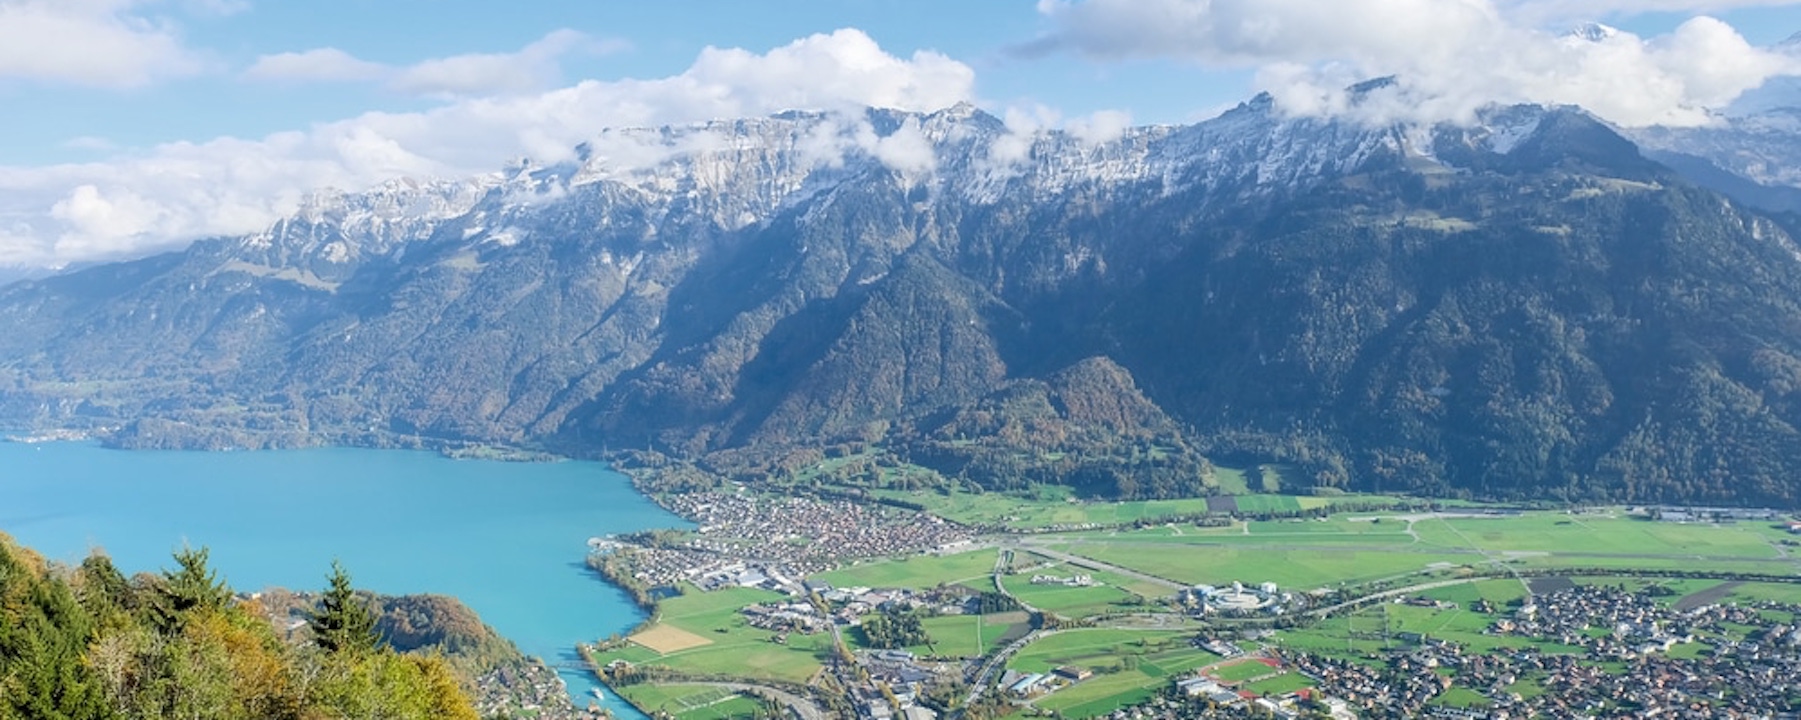 3 Day Top of Europe - Interlaken and Jungfraujoch / Premium Private tour , Hotel 5 star